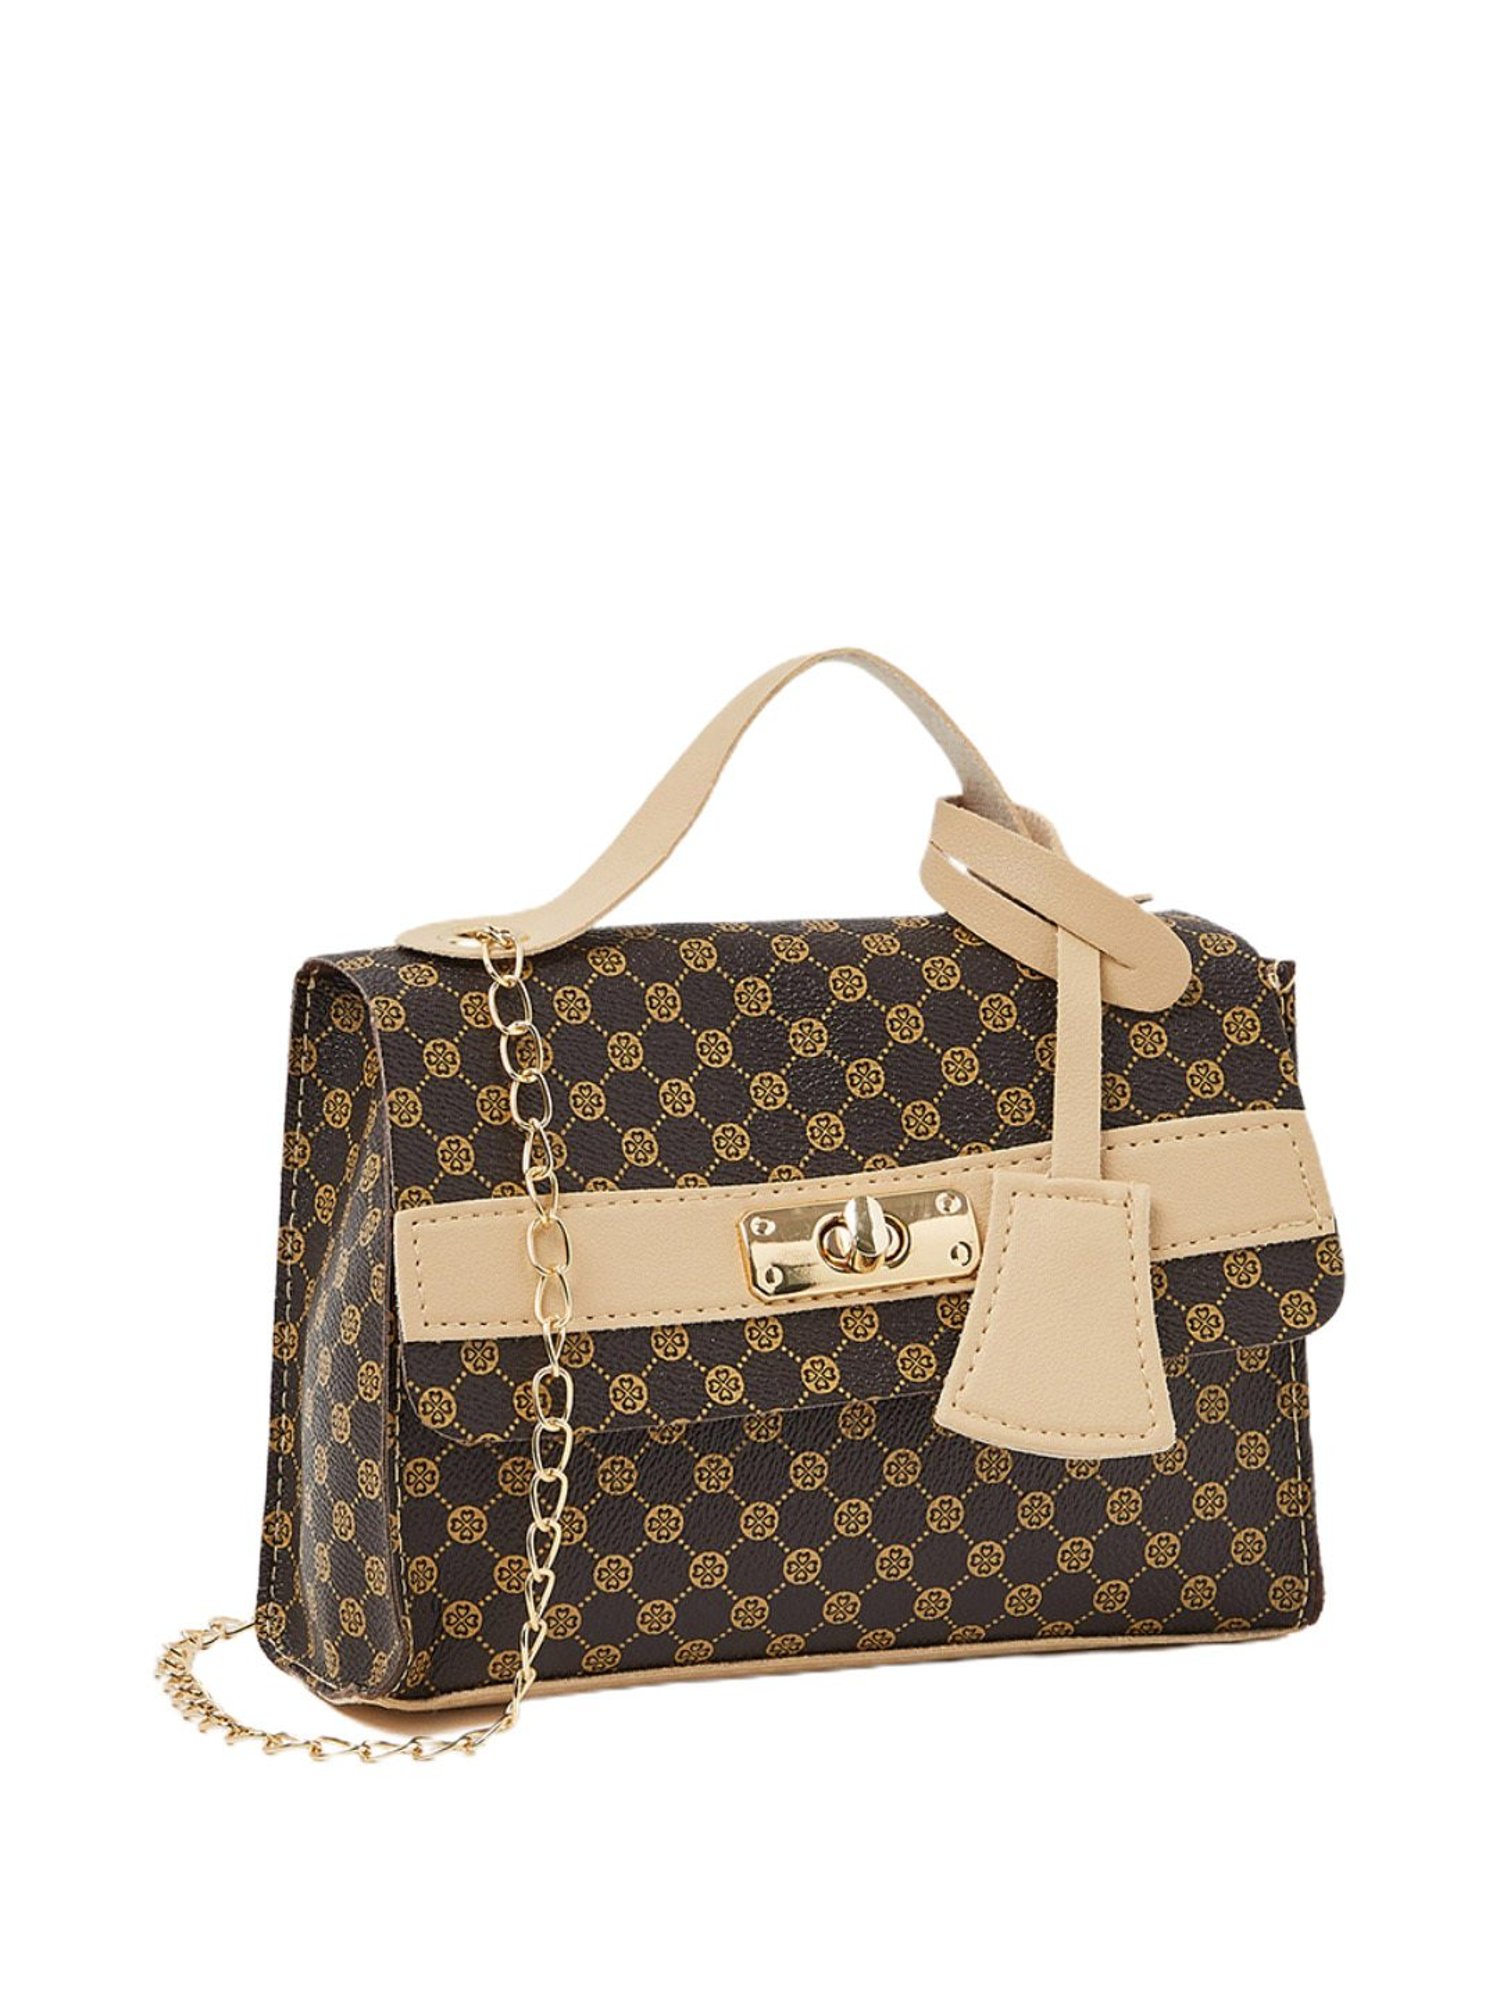 Buy Styli Brown Printed Satchel Handbag at Best Price @ Tata CLiQ